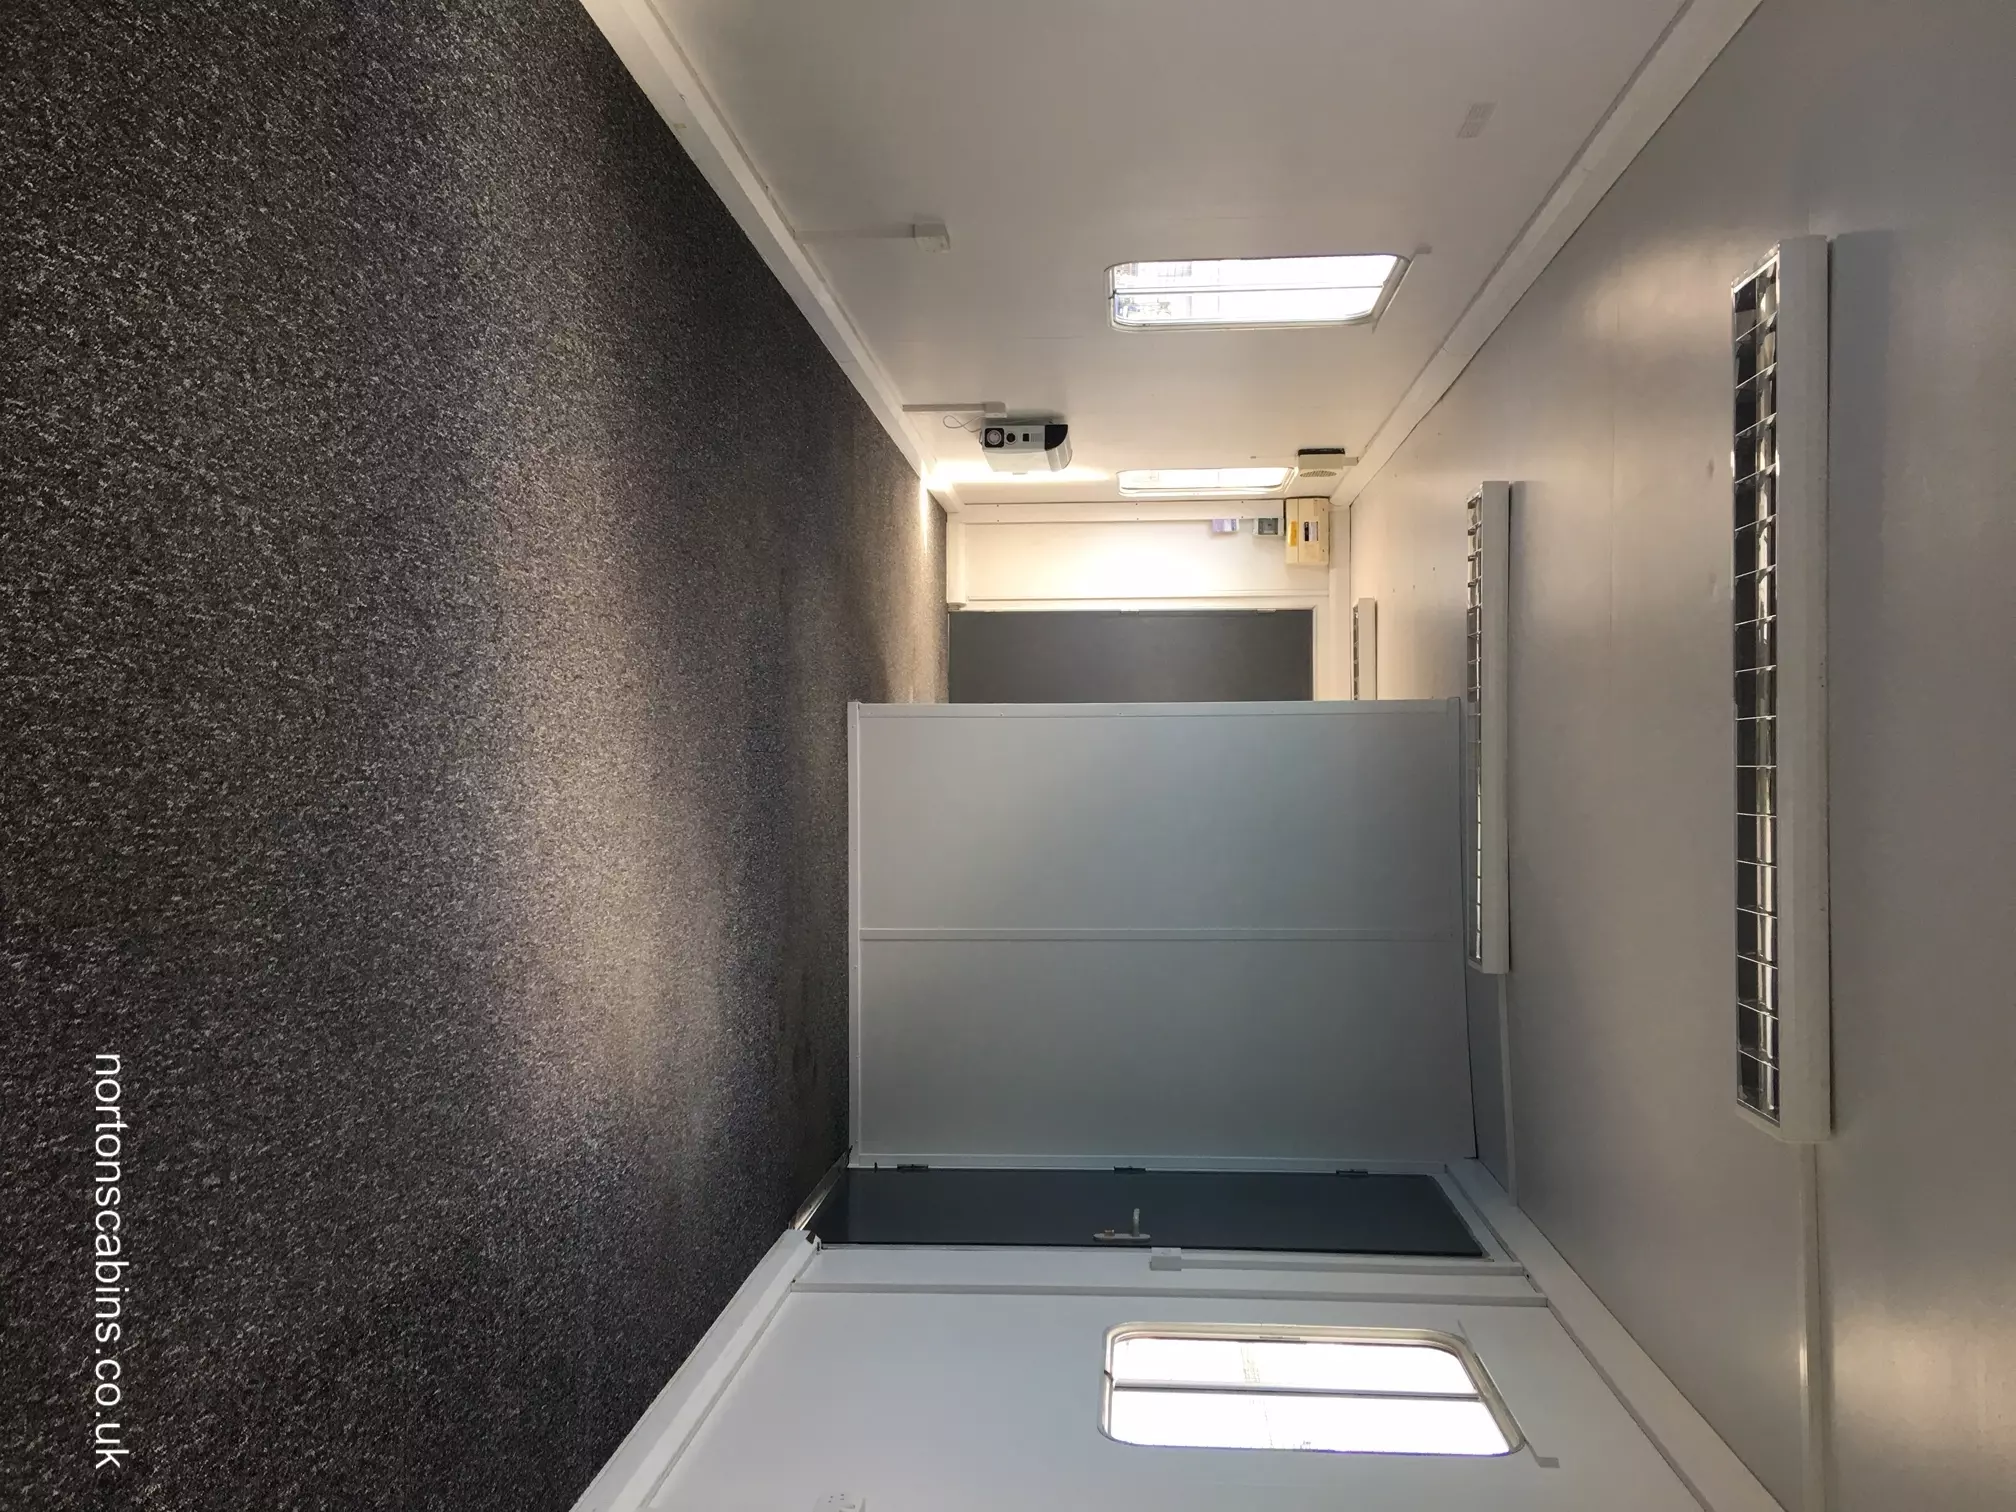 Ref: Nor218 32ftx10ft Office Kitchen Toilet £9,950 +VAT